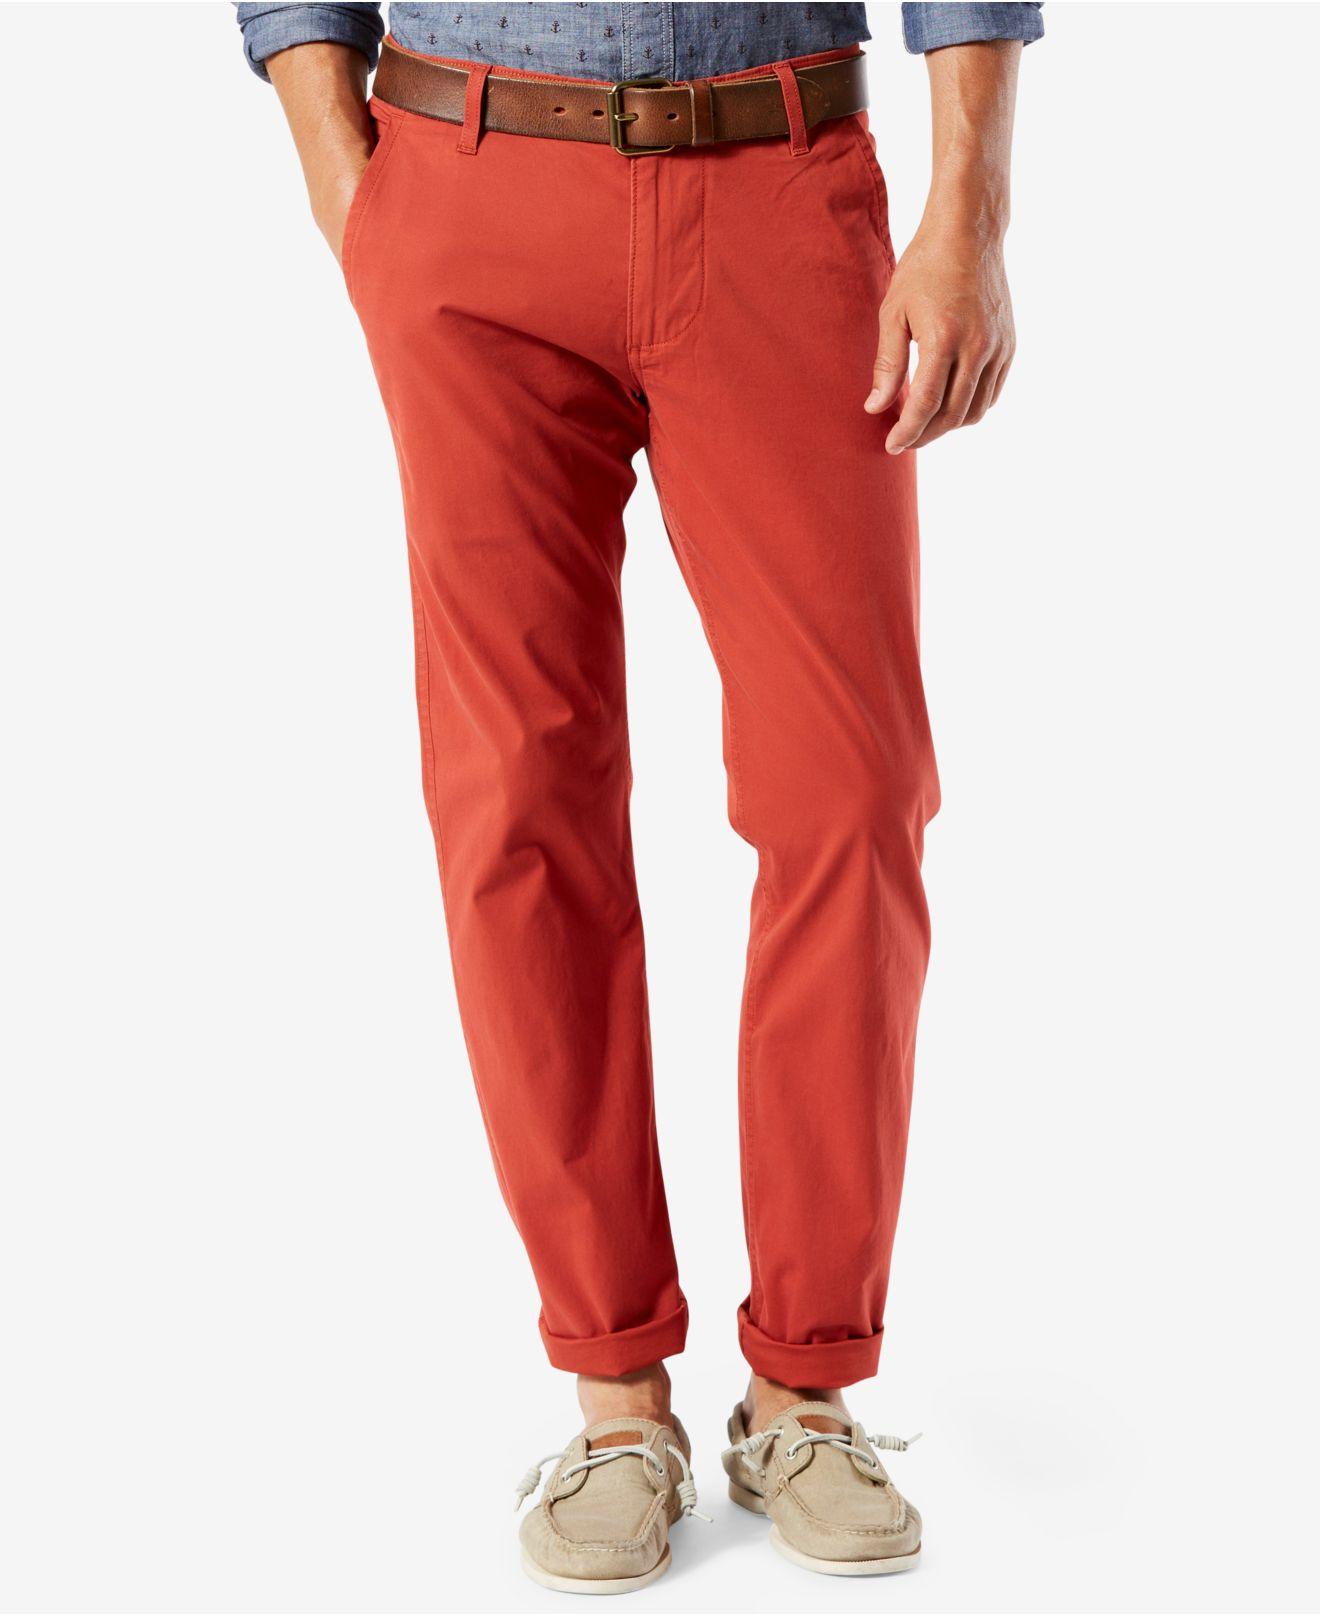 Lyst - Dockers Men's Slim-tapered Alpha Khaki Pants in Red for Men